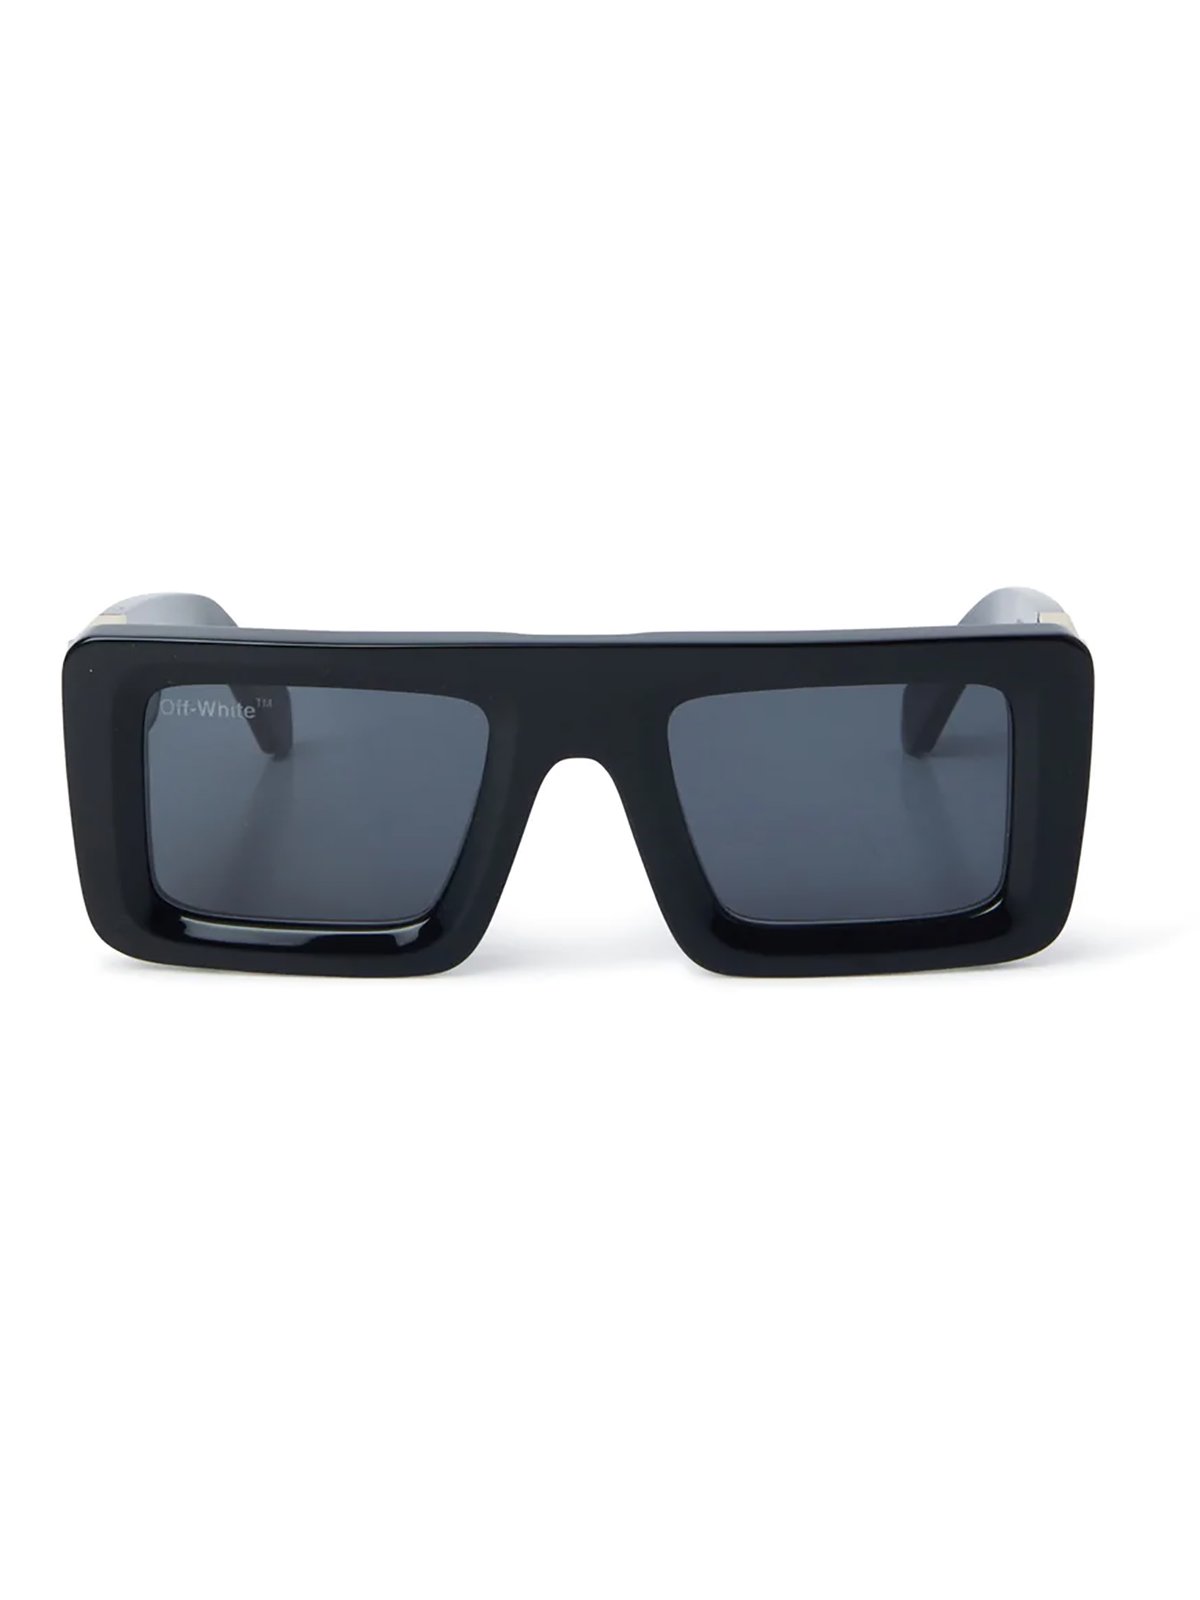 Off-White Square Frame Sunglasses